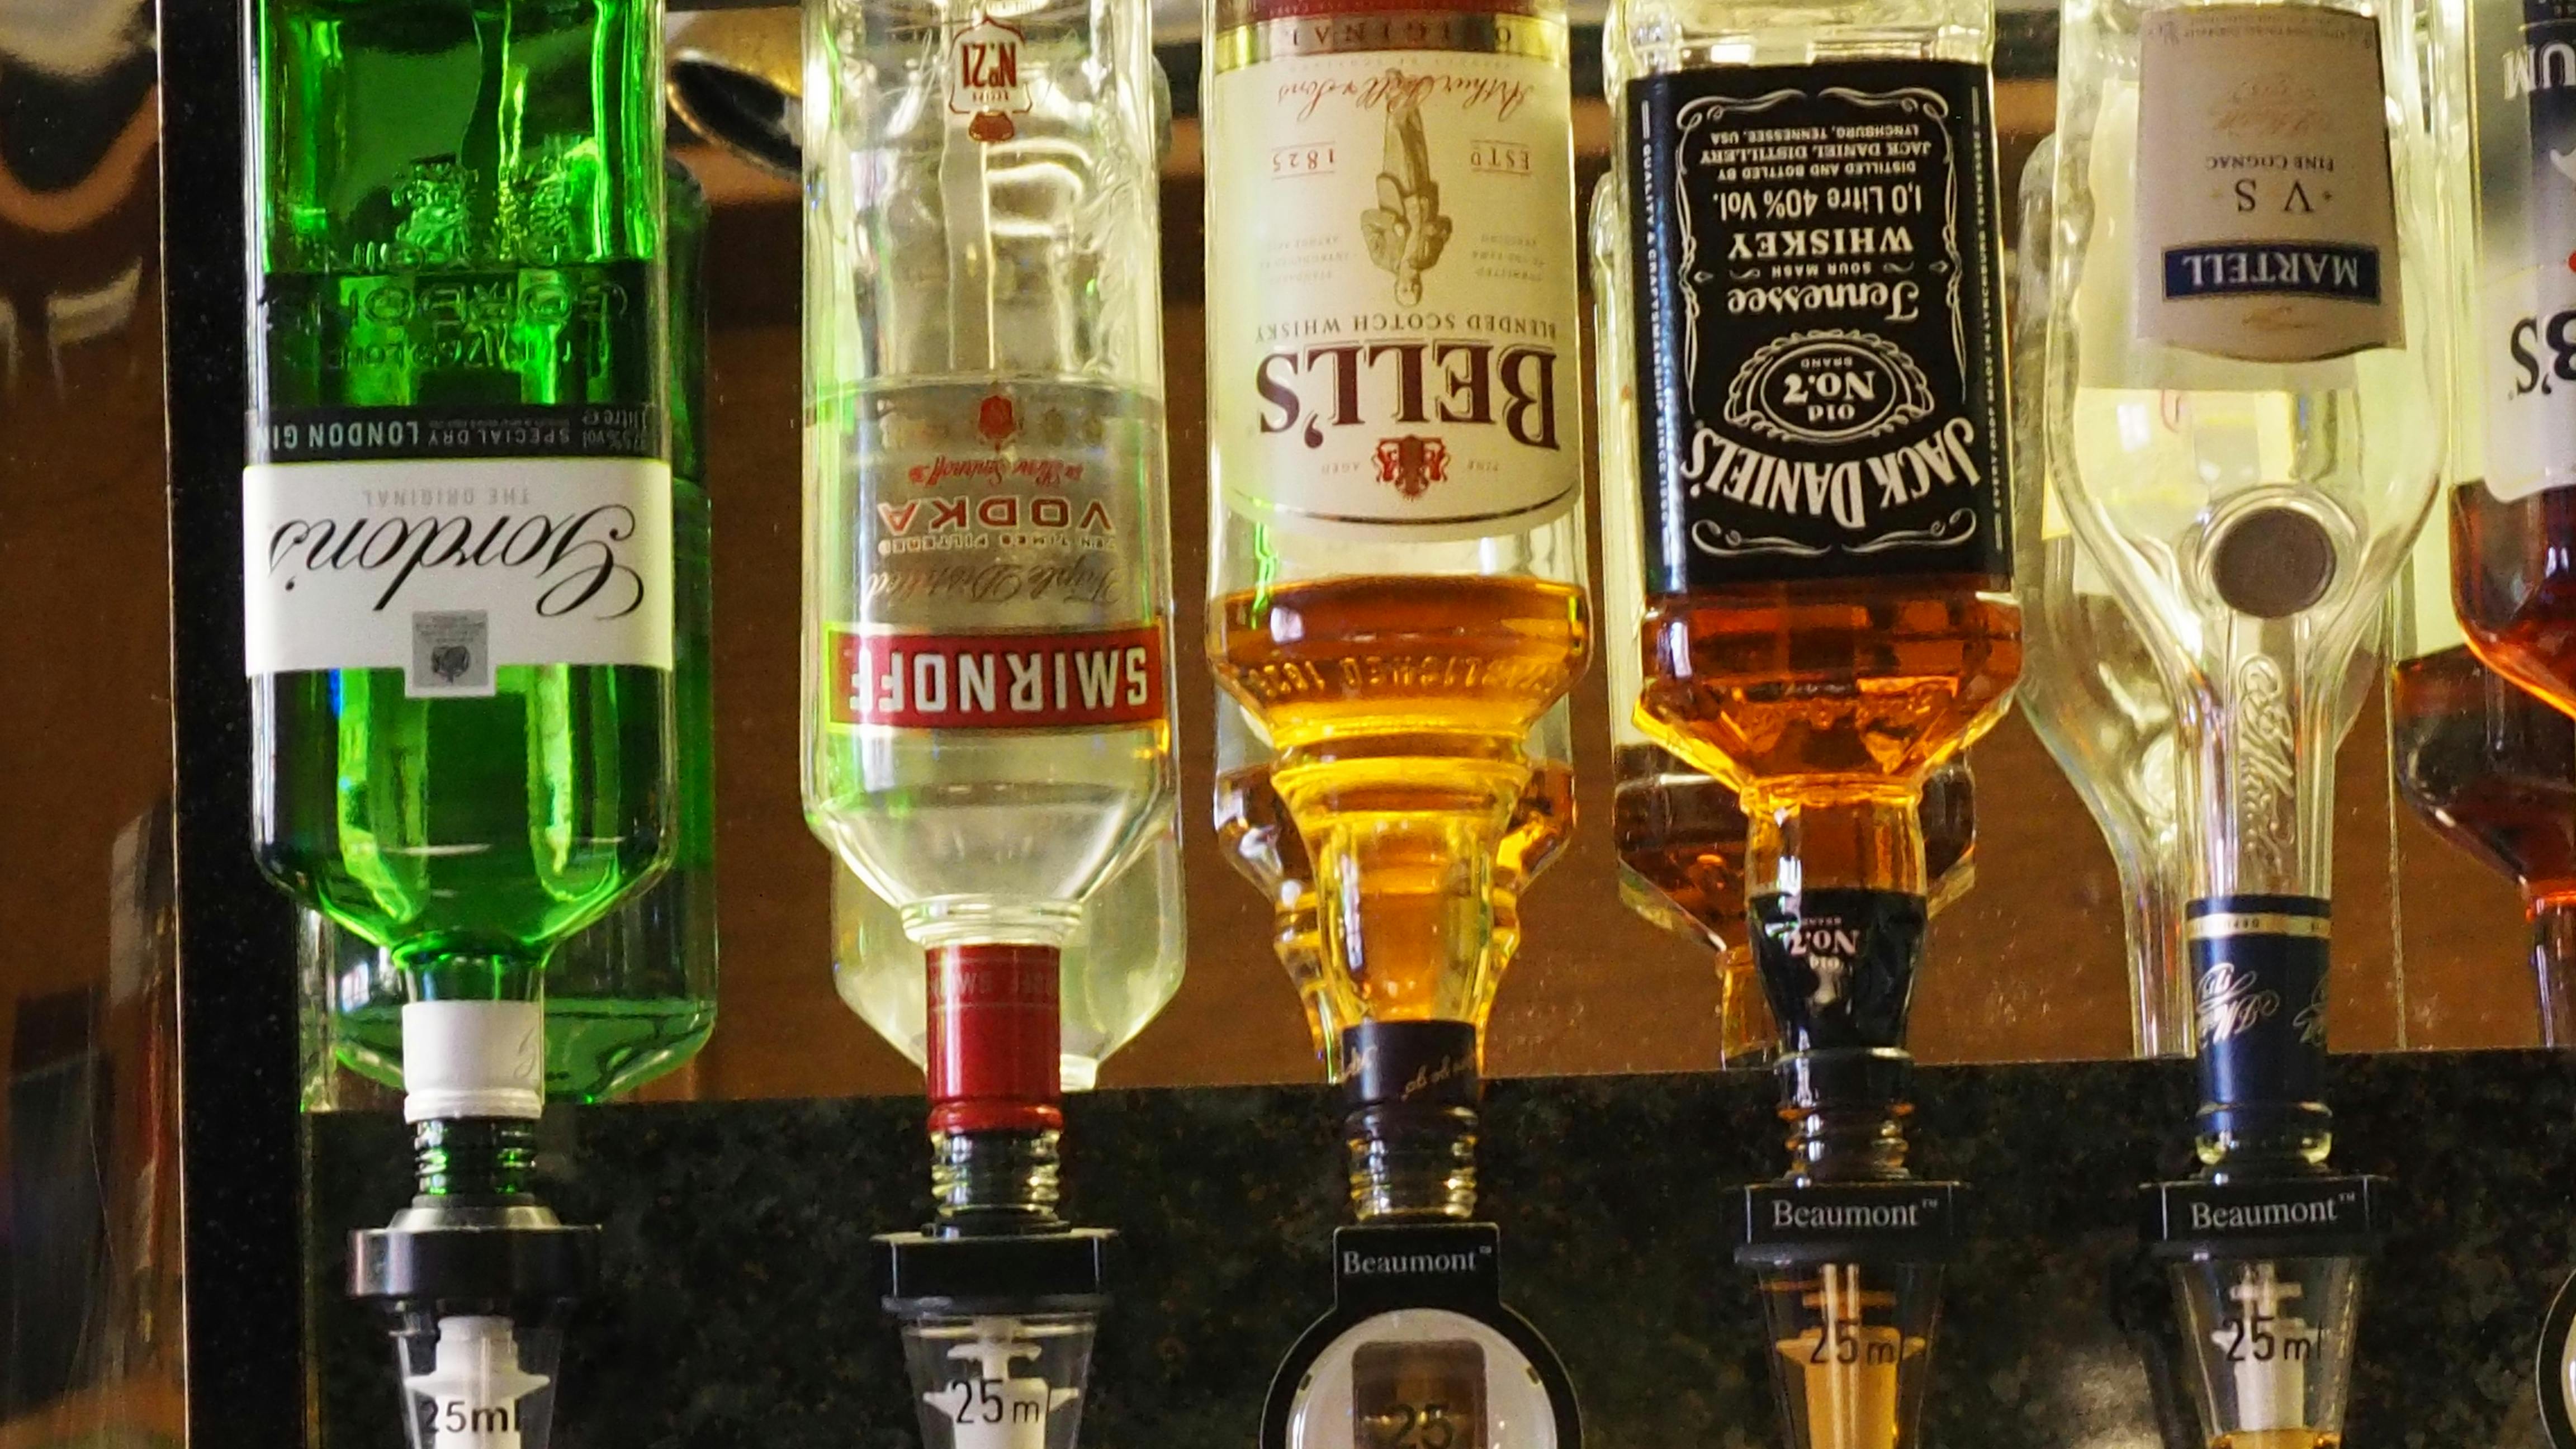 Free stock photo of alcohol, alcohol bottles, bar